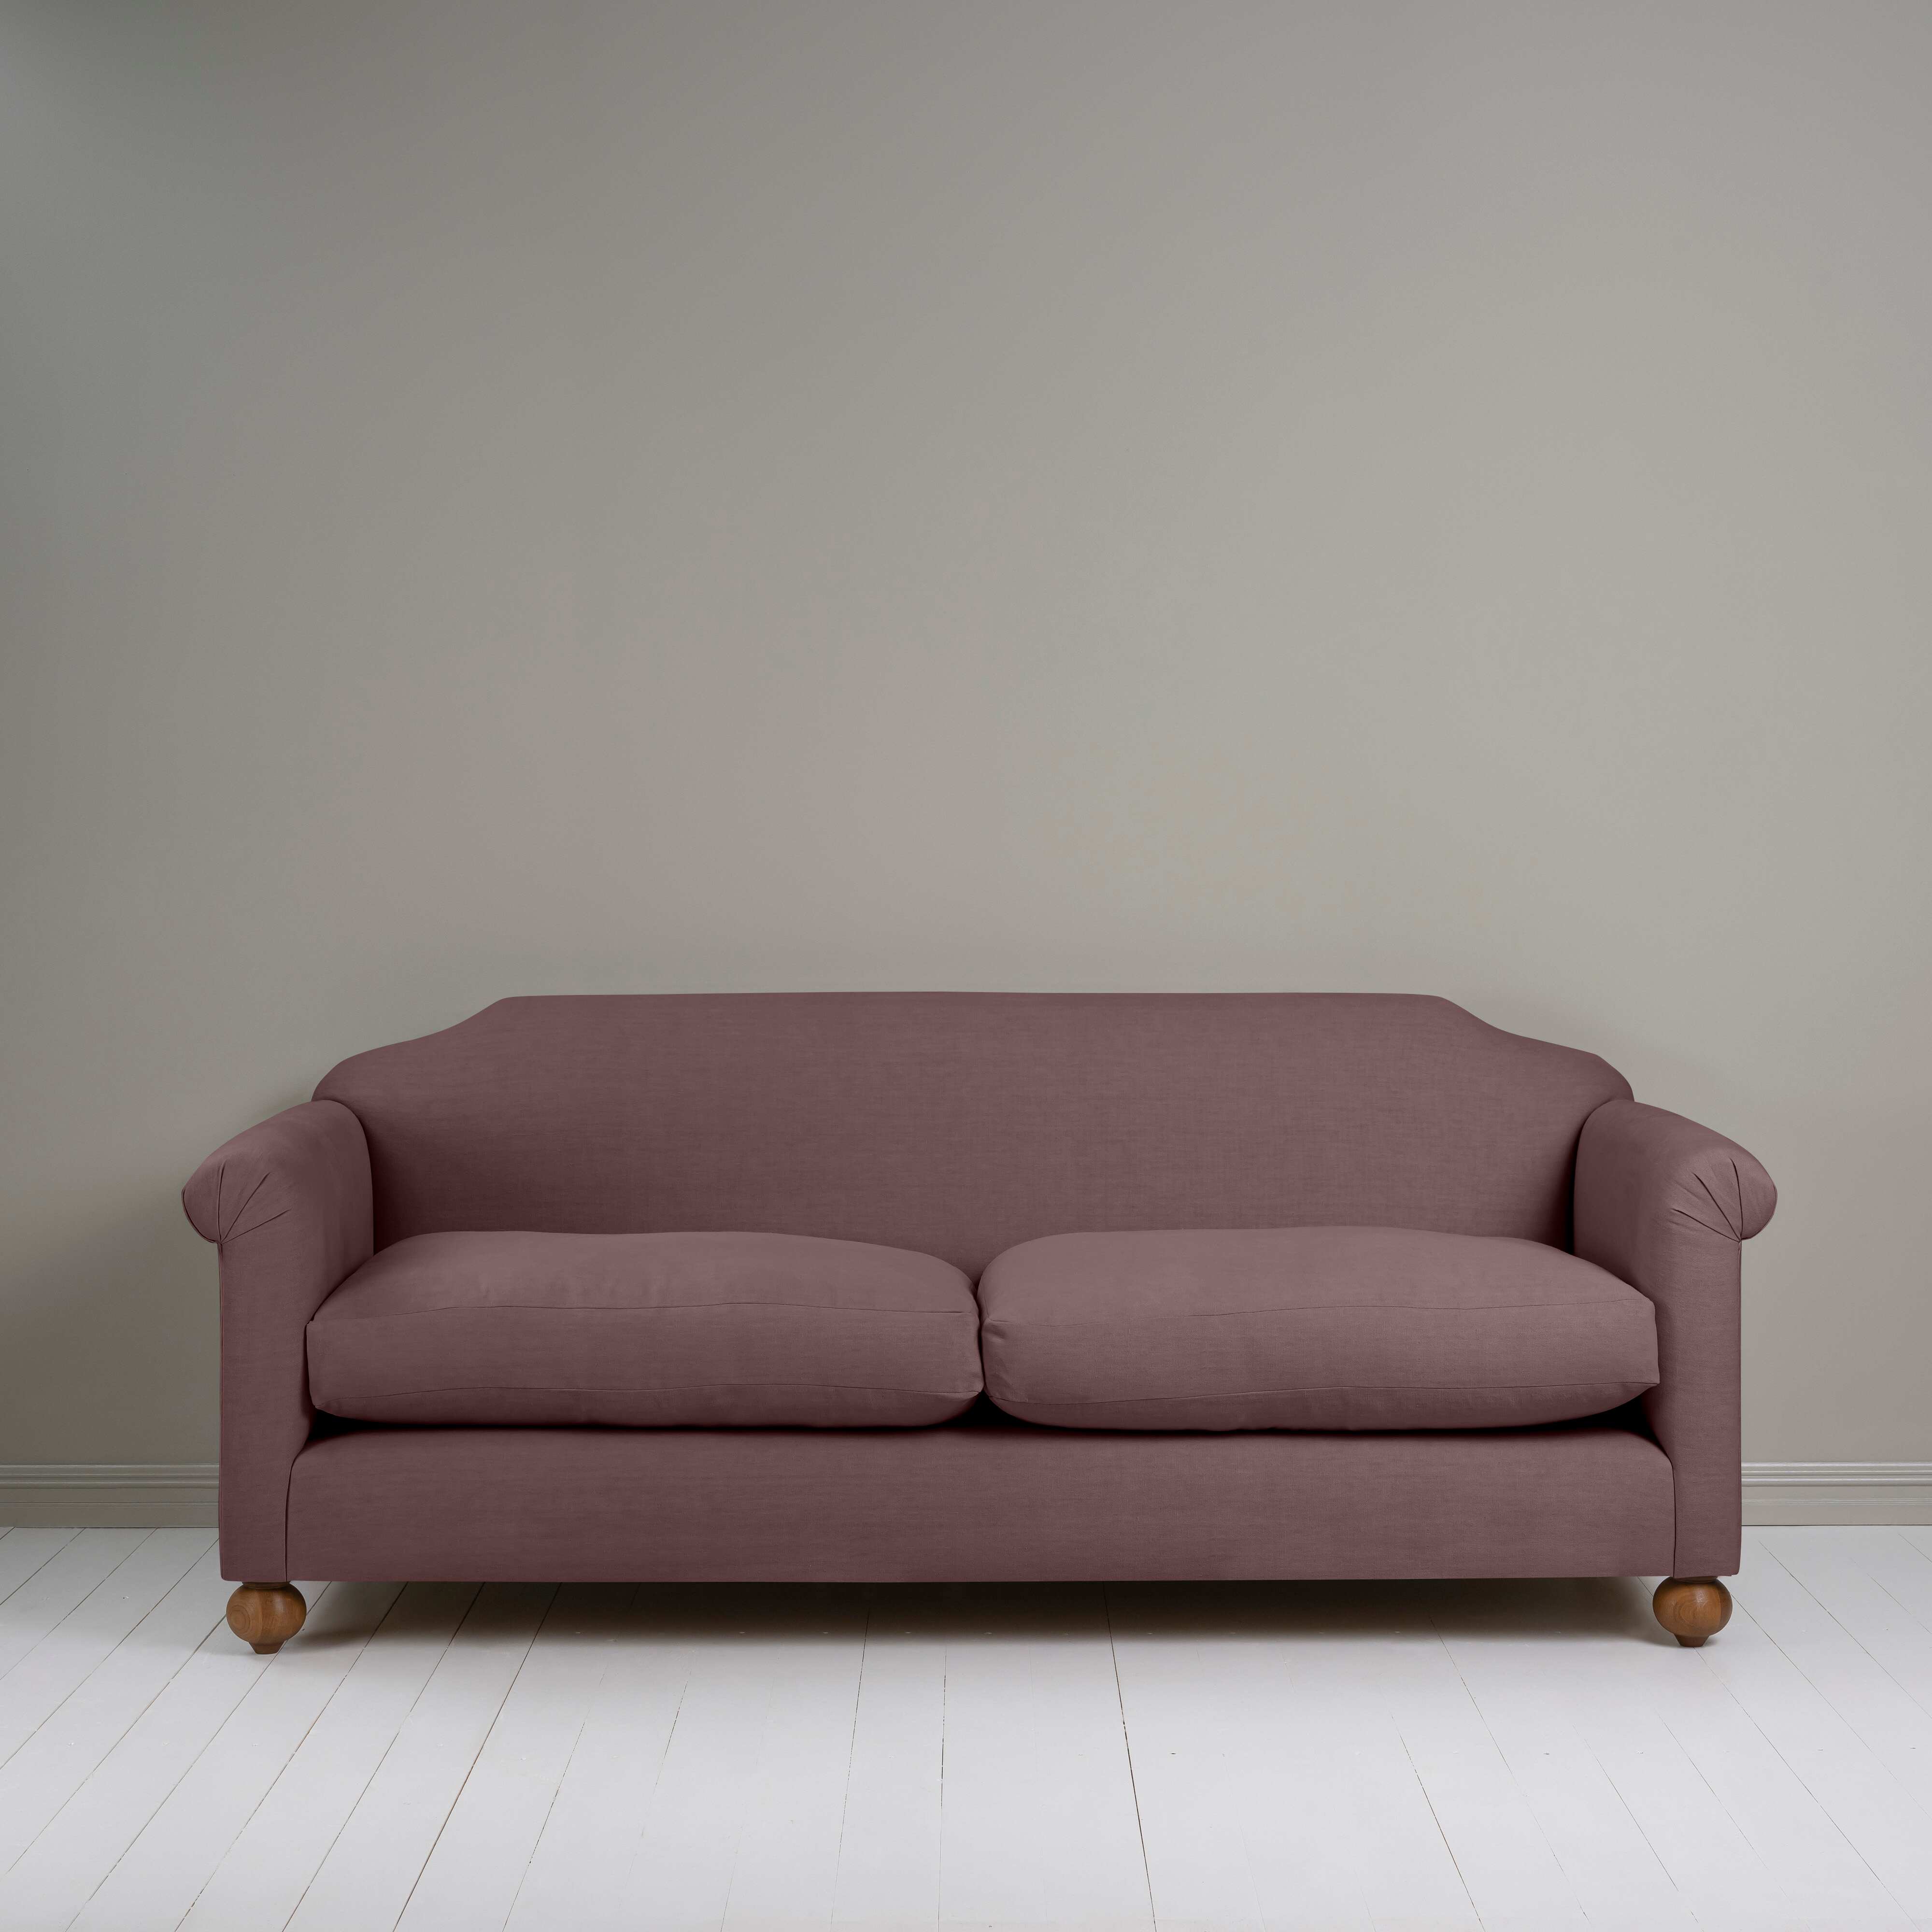  Dolittle 4 seater Sofa in Laidback Linen Damson 